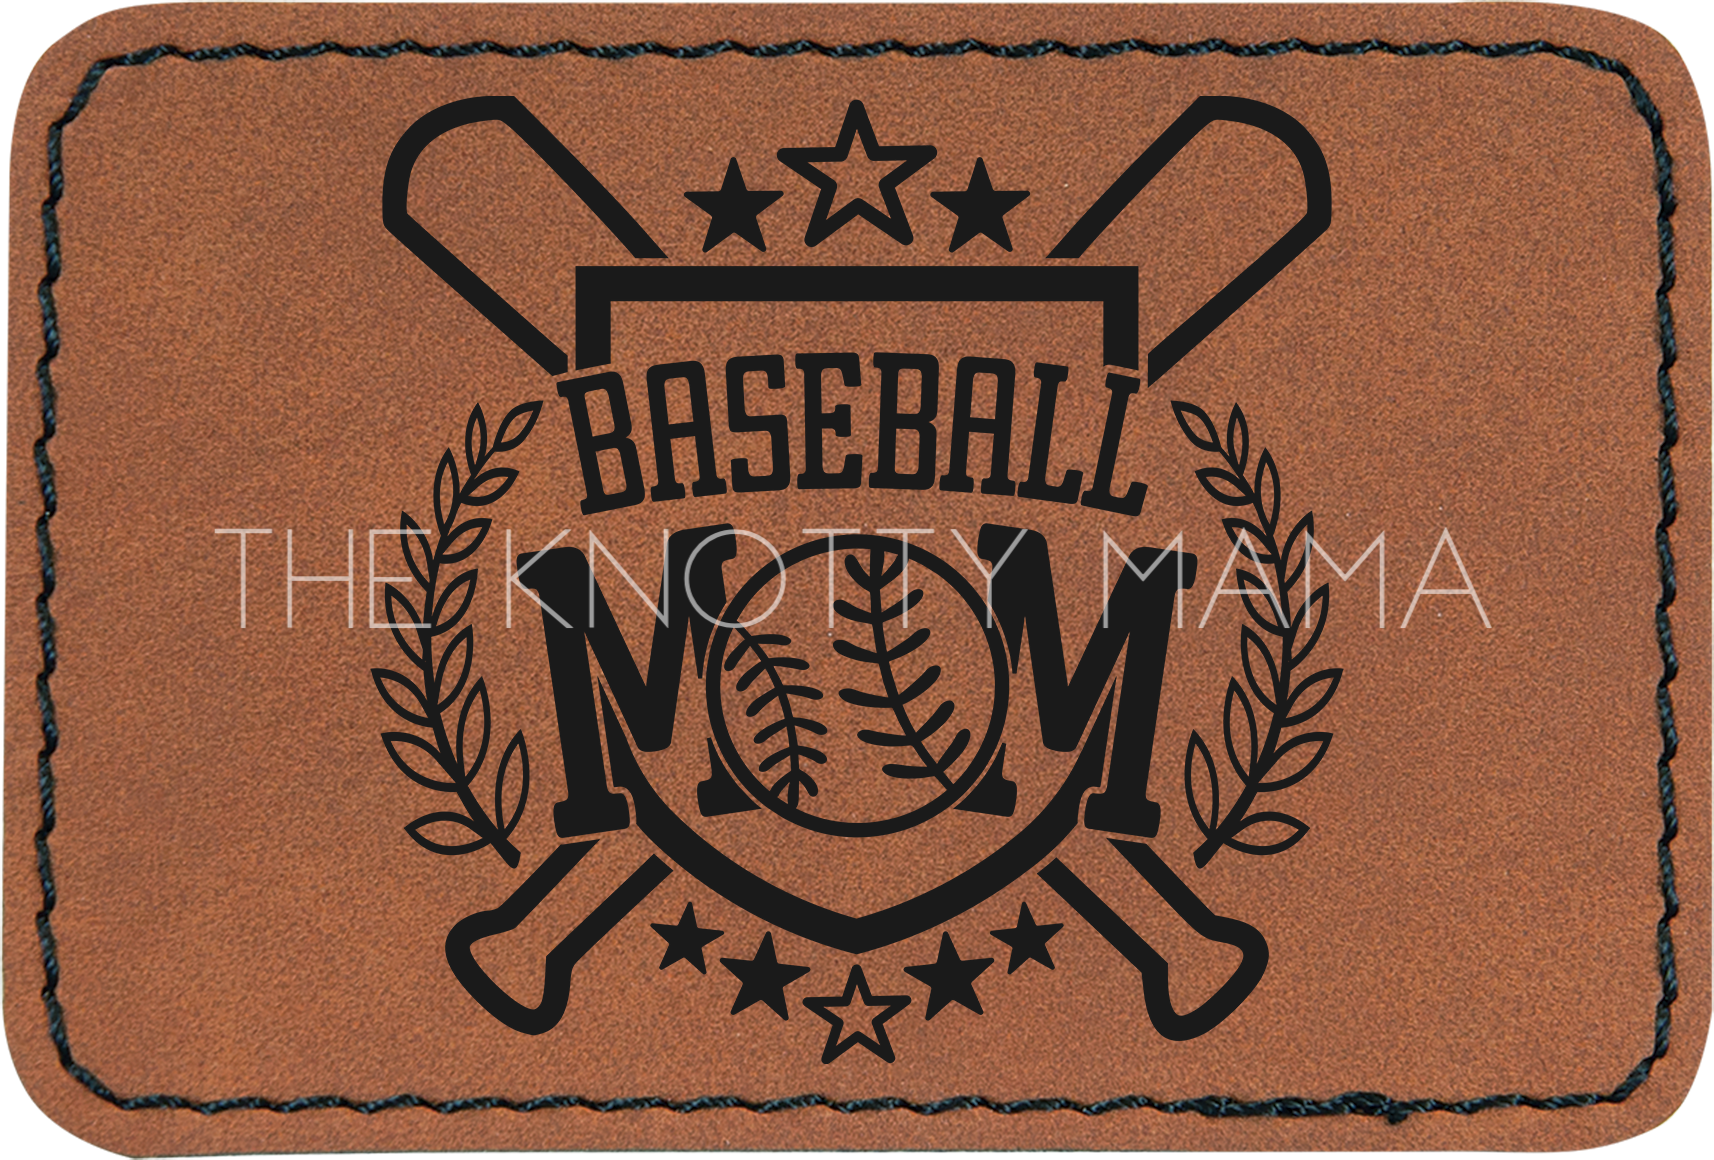 Baseball Mom League Patch